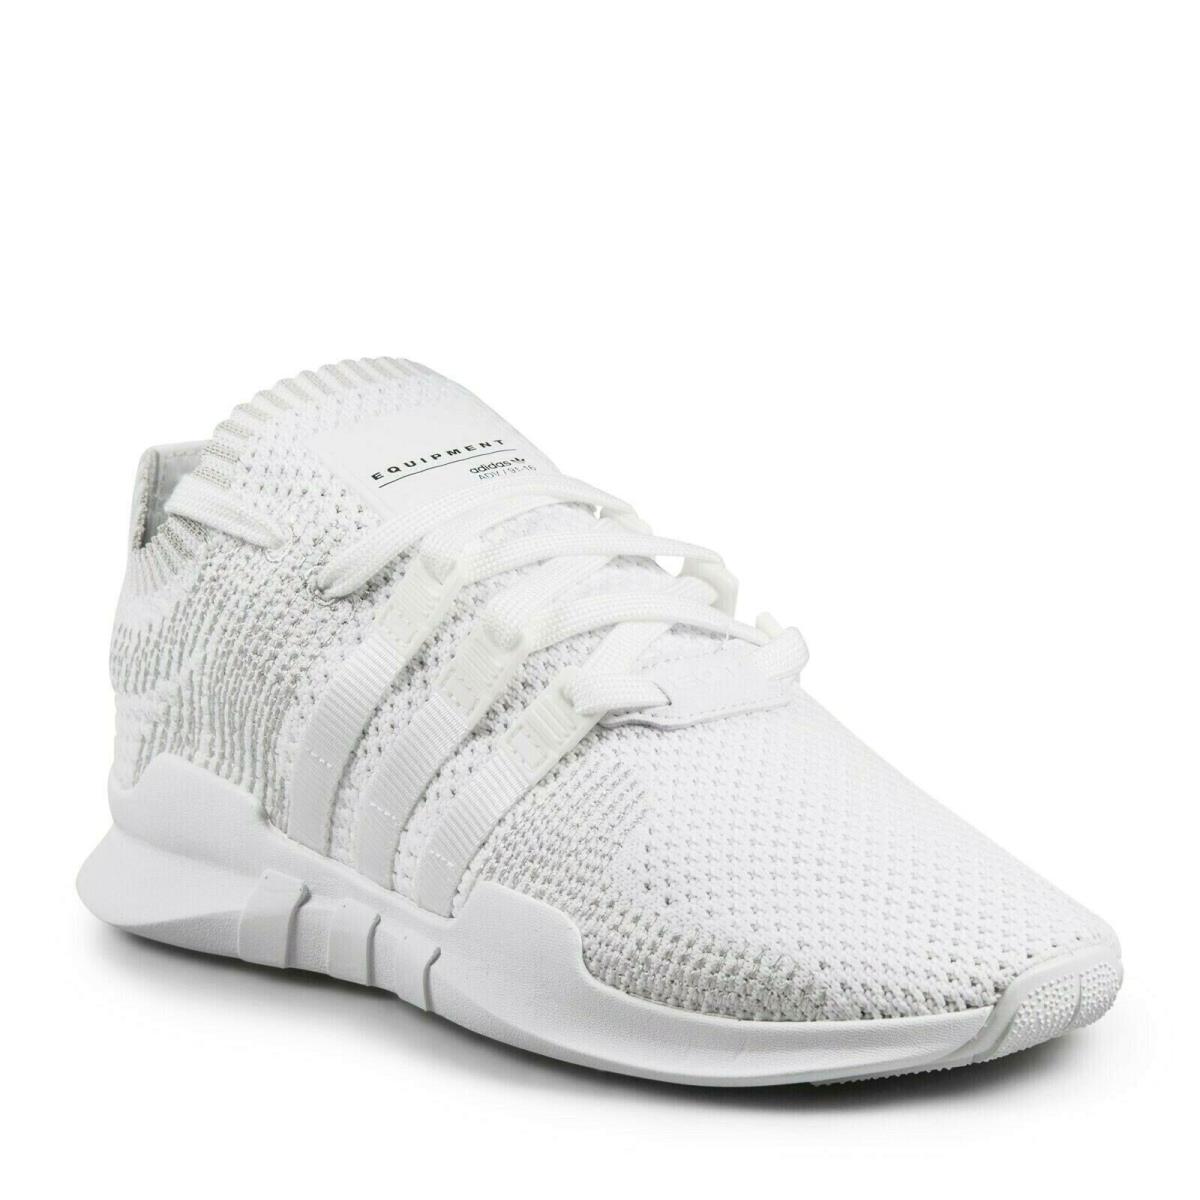 Adidas Eqt Support Adv Primeknit White/sub Green BY9391 Shoe | 692740337609 - Adidas shoes EQT ADV - White | SporTipTop